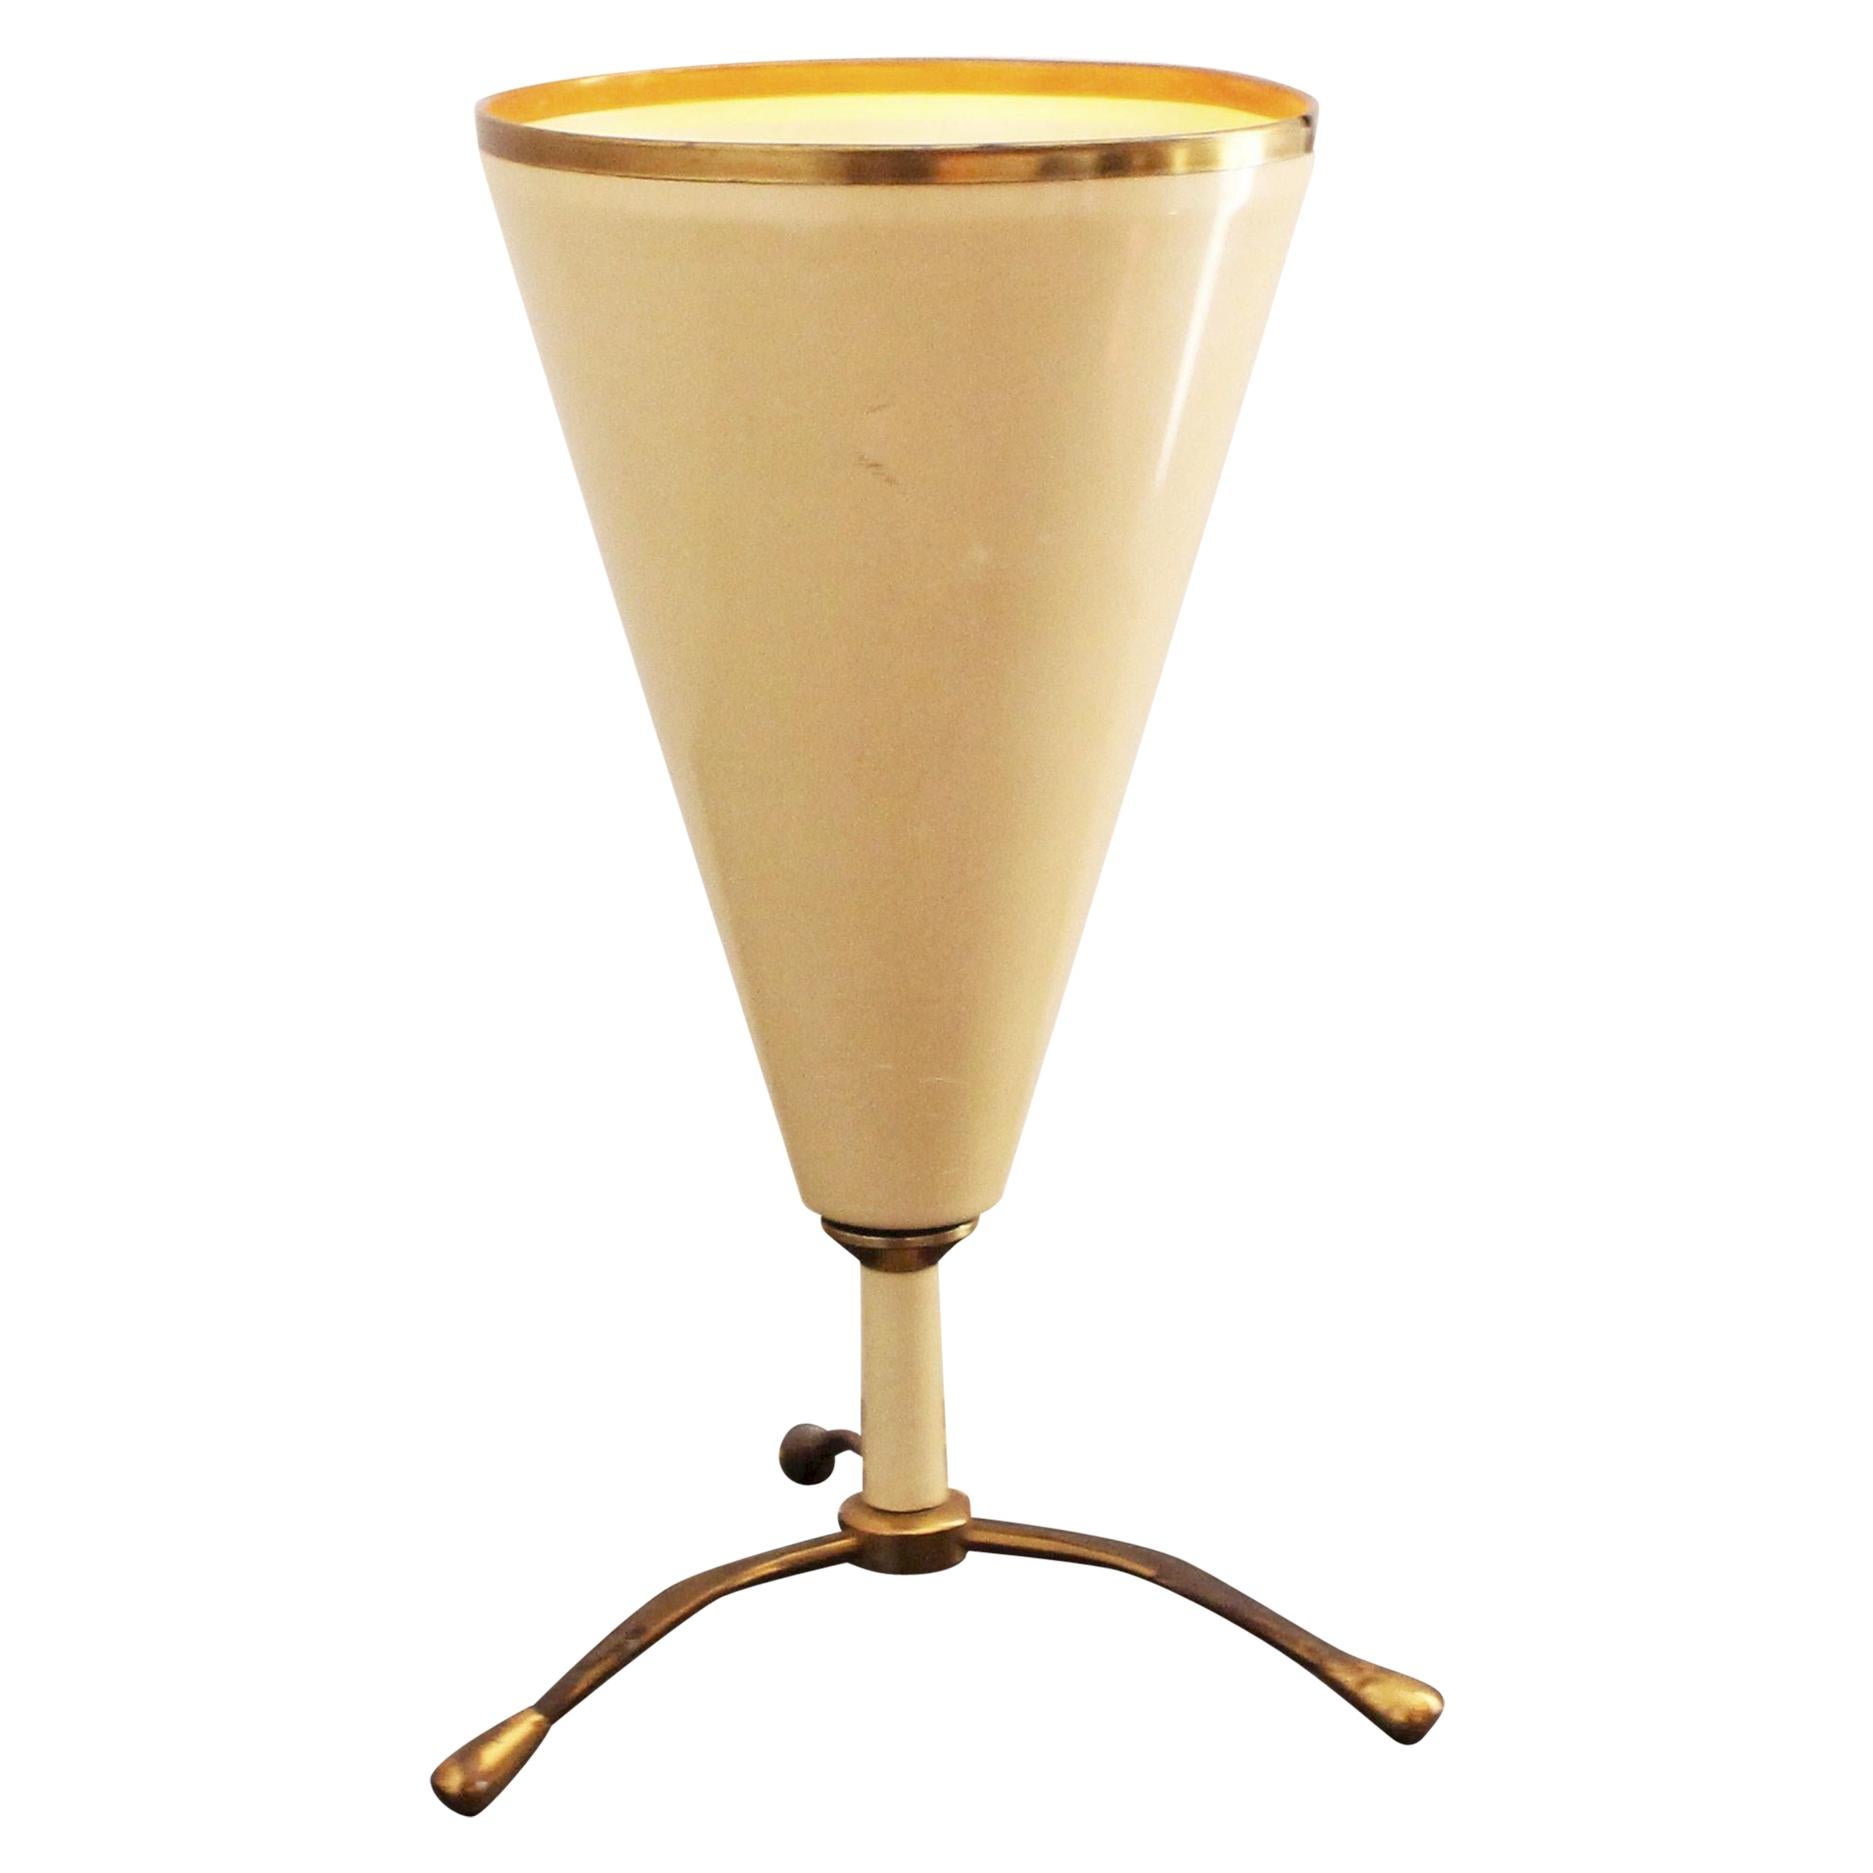 Italian Table Lamp in the Style of Stilnovo